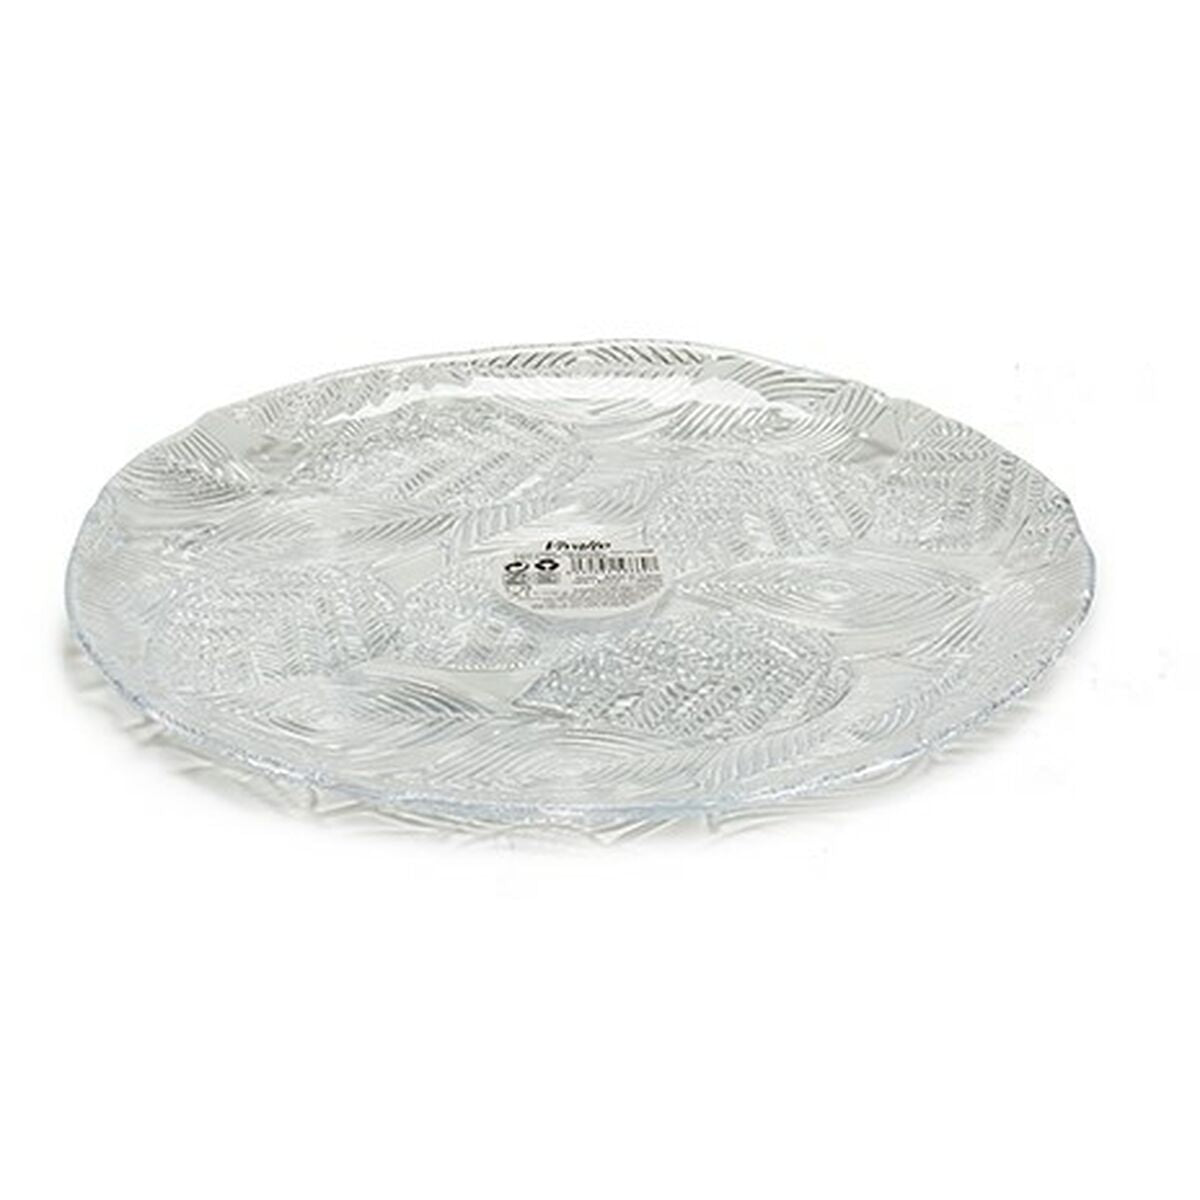 Eetbord Tirolo Transparant Glas 27,5 x 1,7 x 27,5 cm (6 Stuks)